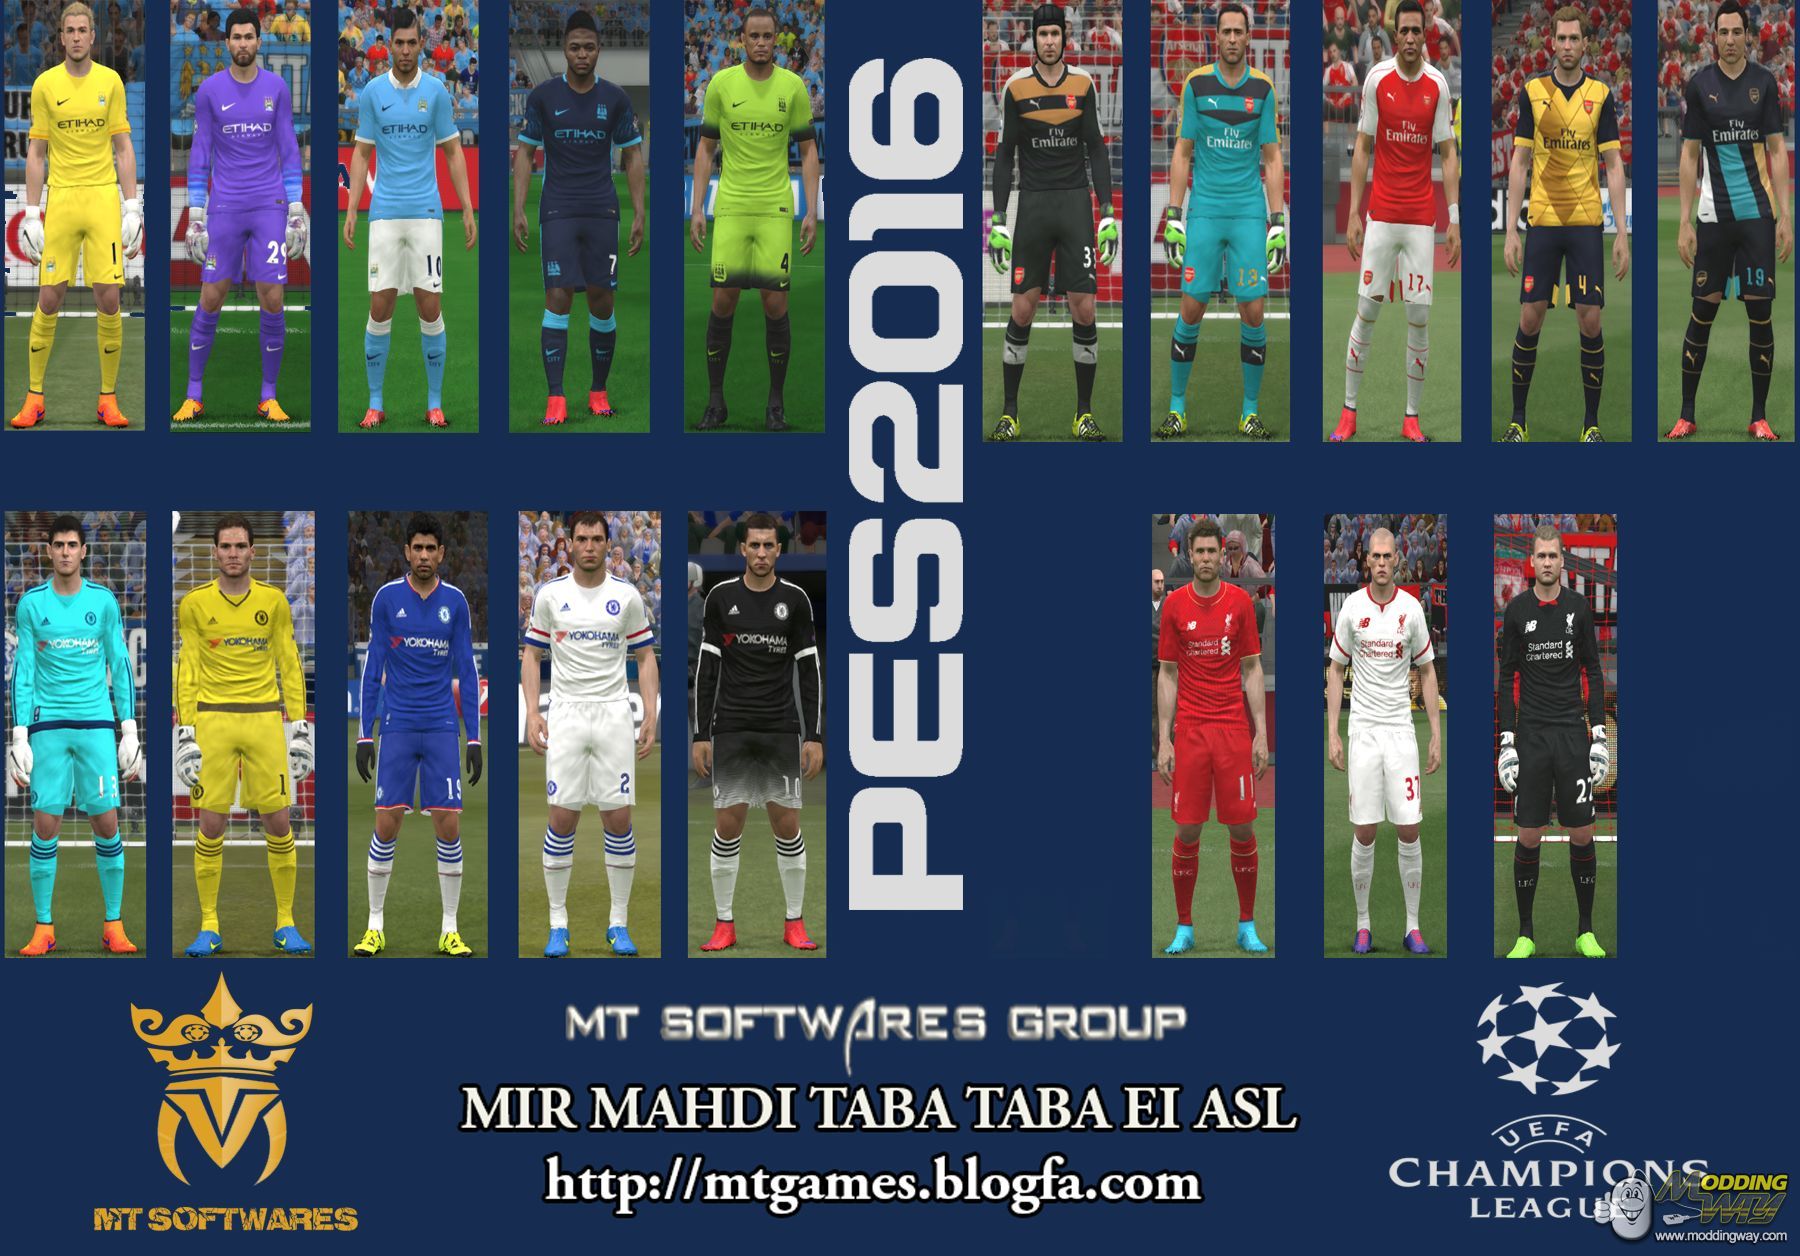 RSC Anderlecht Home/Away kits image - [PES-16] Megaforce teams Add